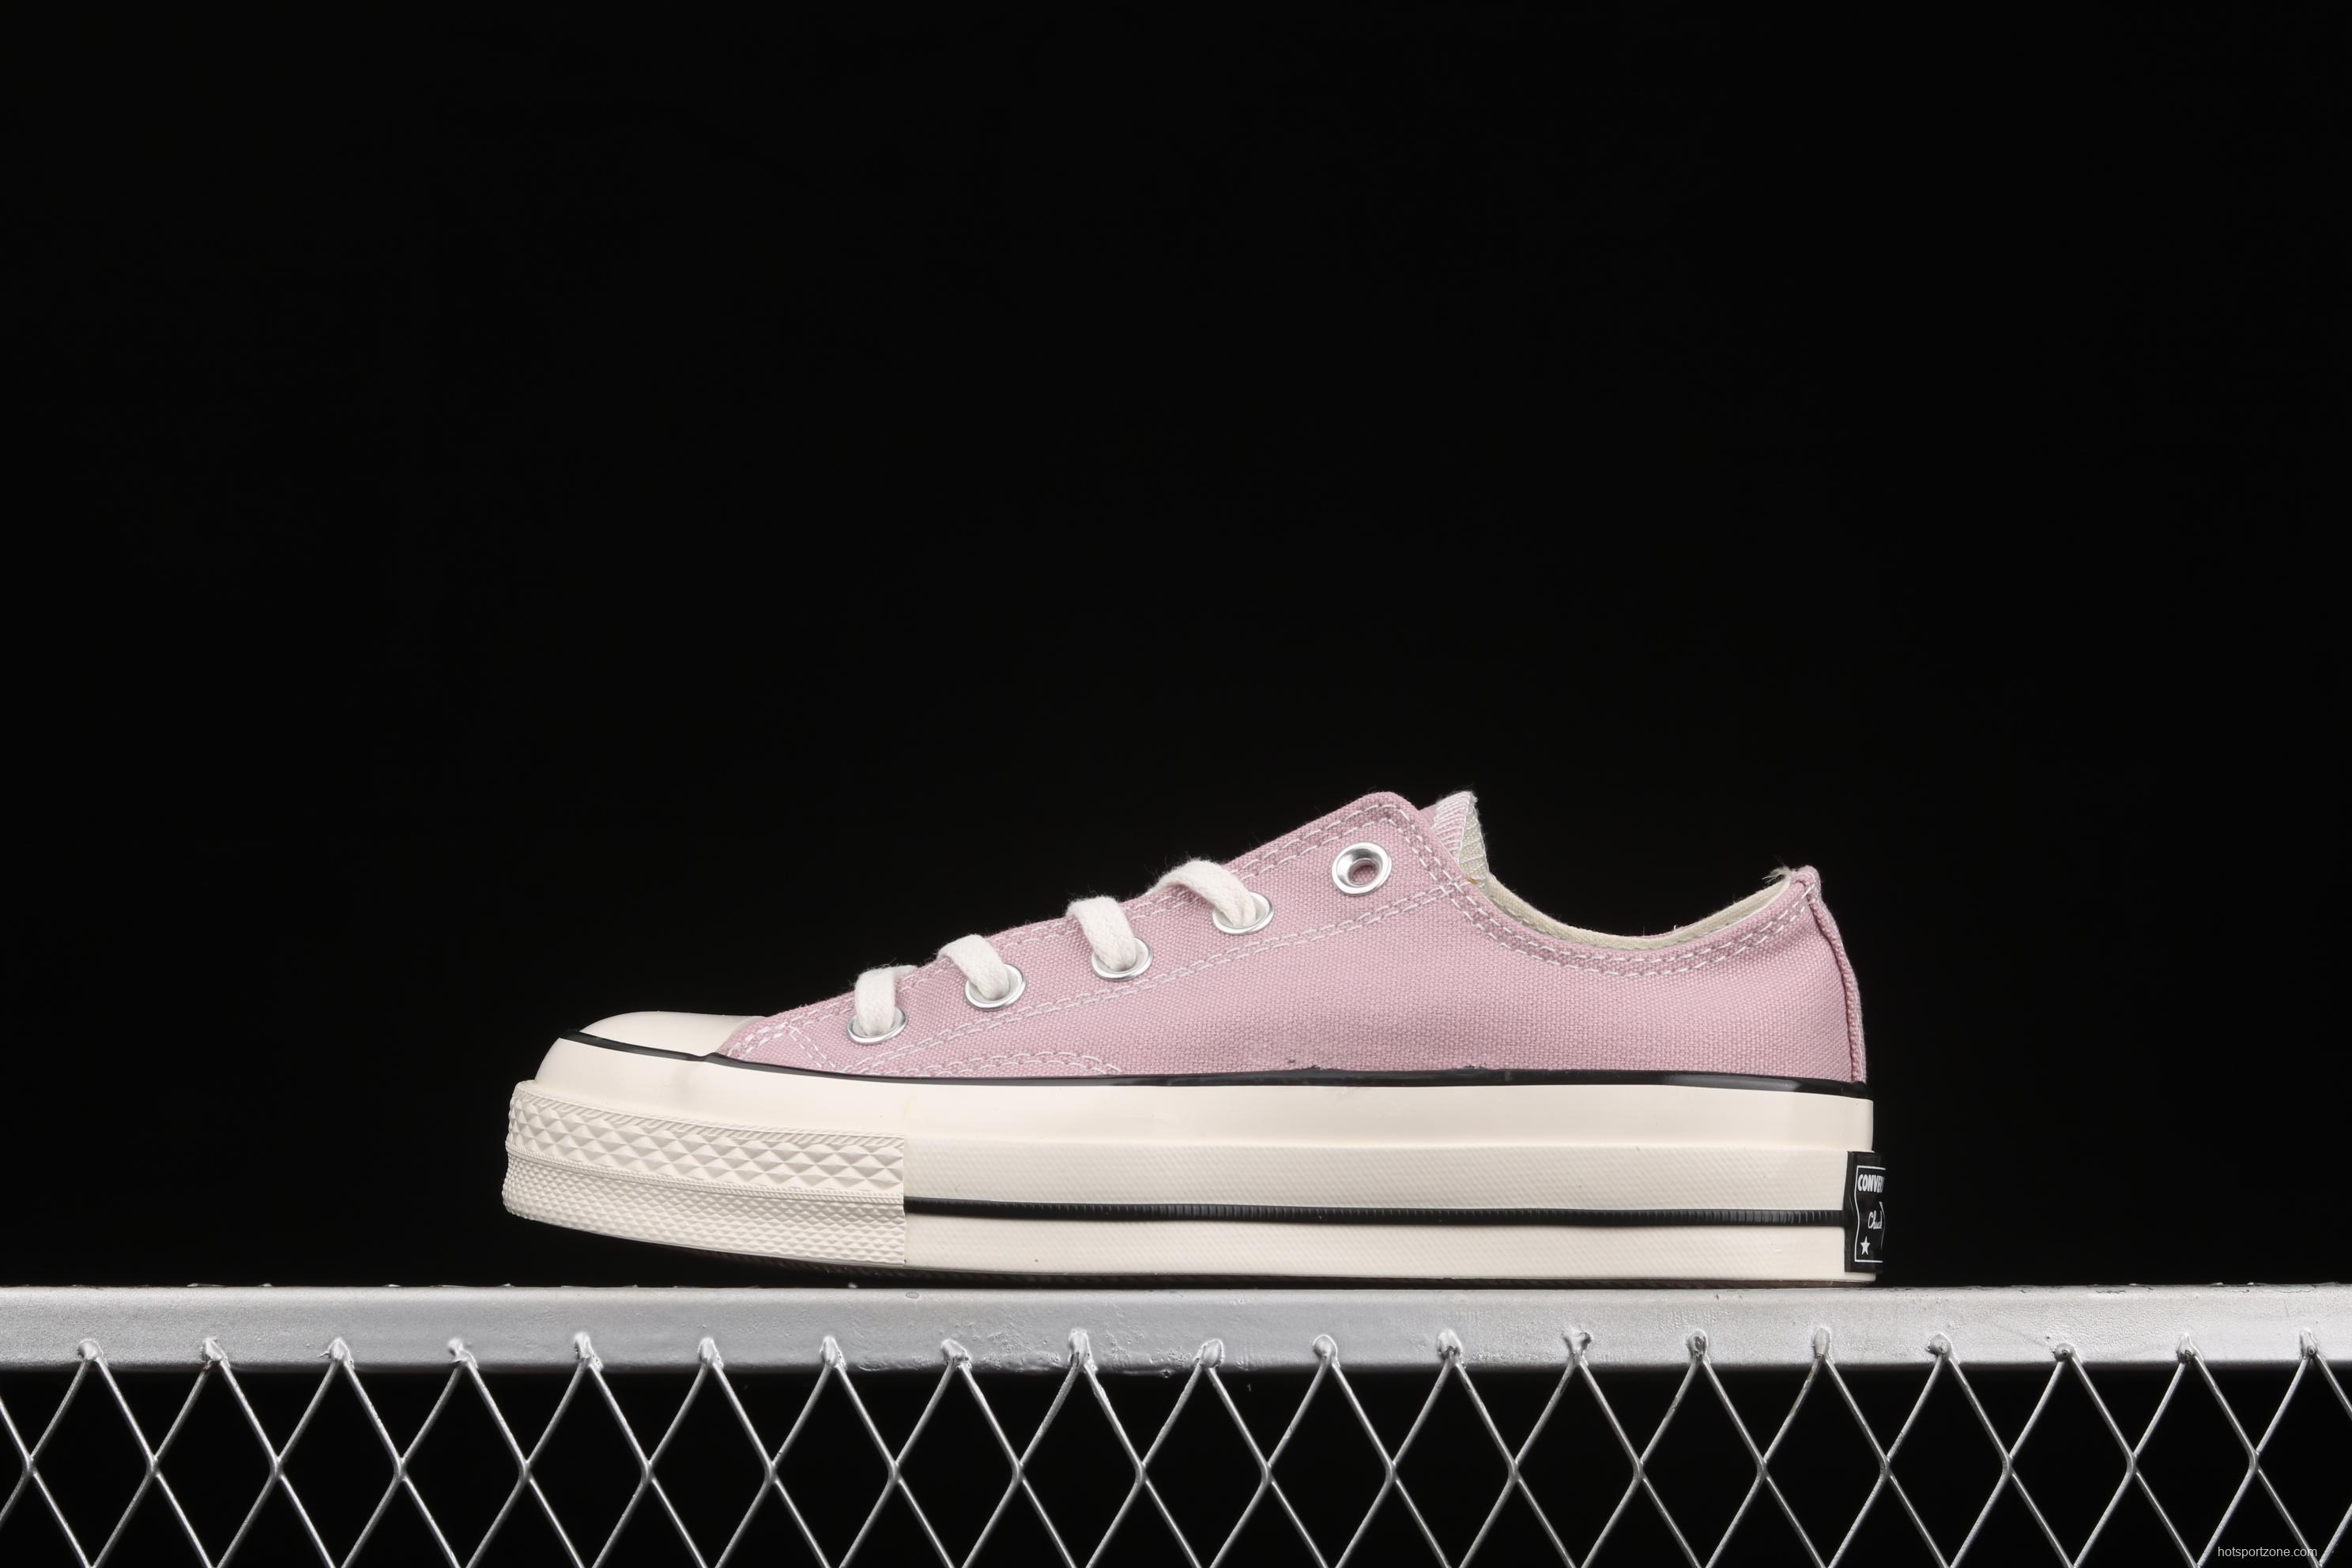 Converse 1970 s color haze pink purple low top casual board shoes 171478C